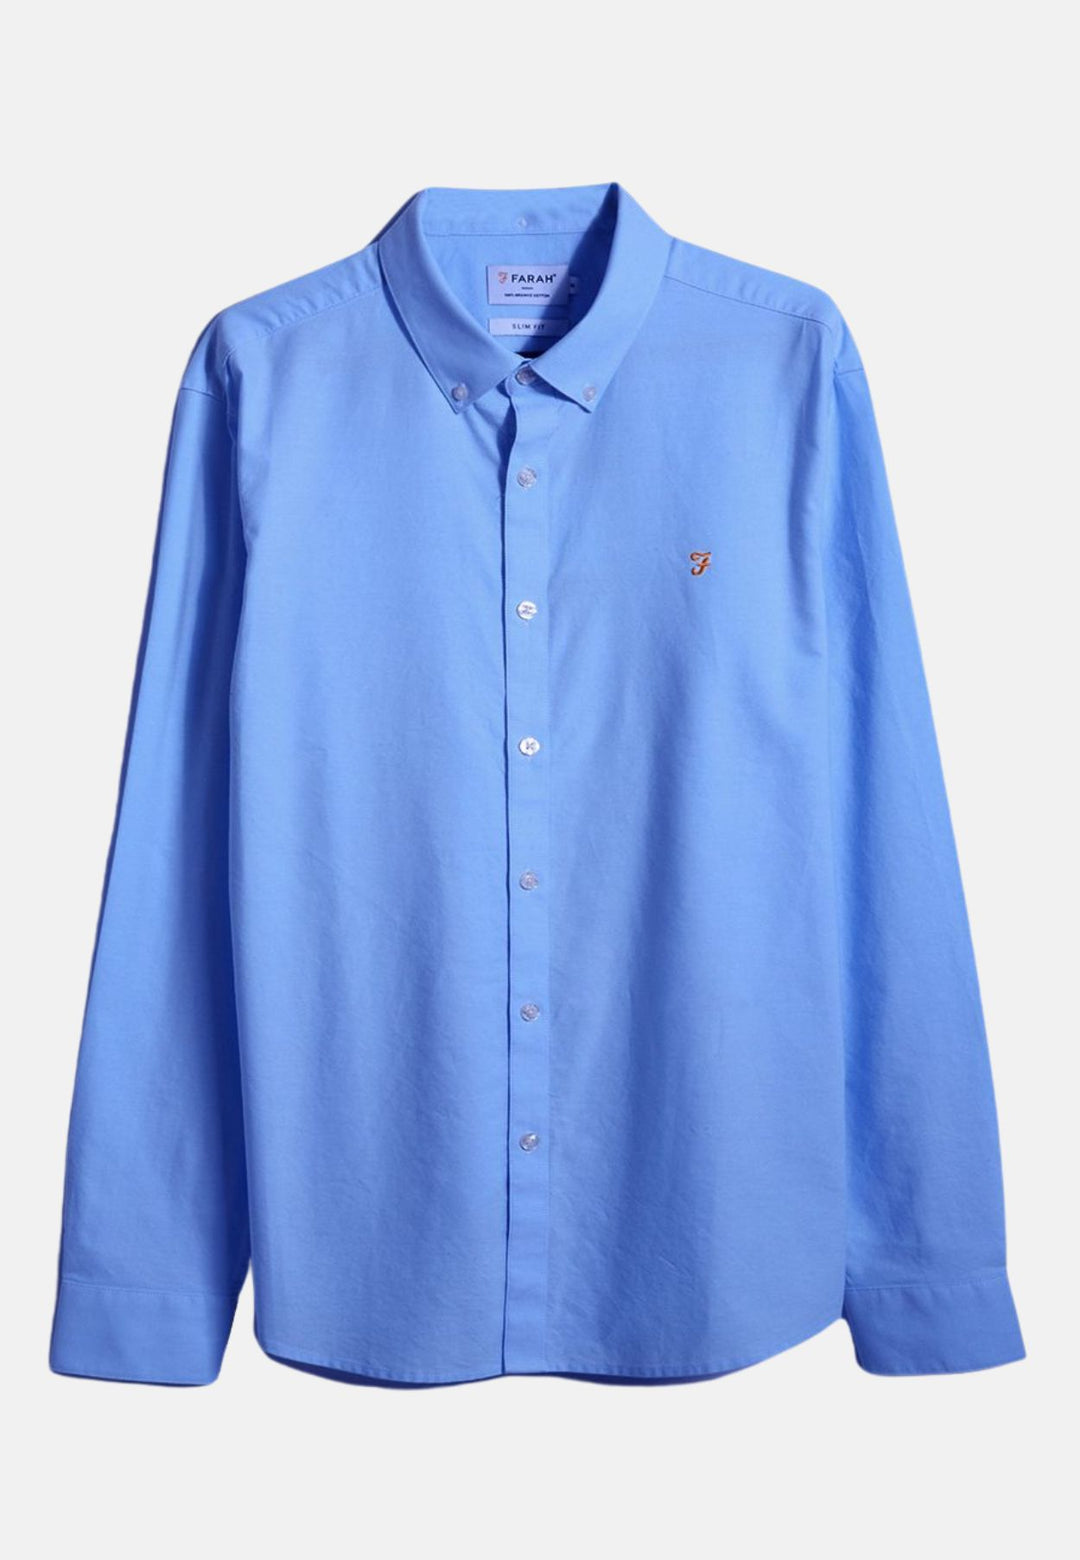 Men's Farah Brewer Oxford Shirt in Blue